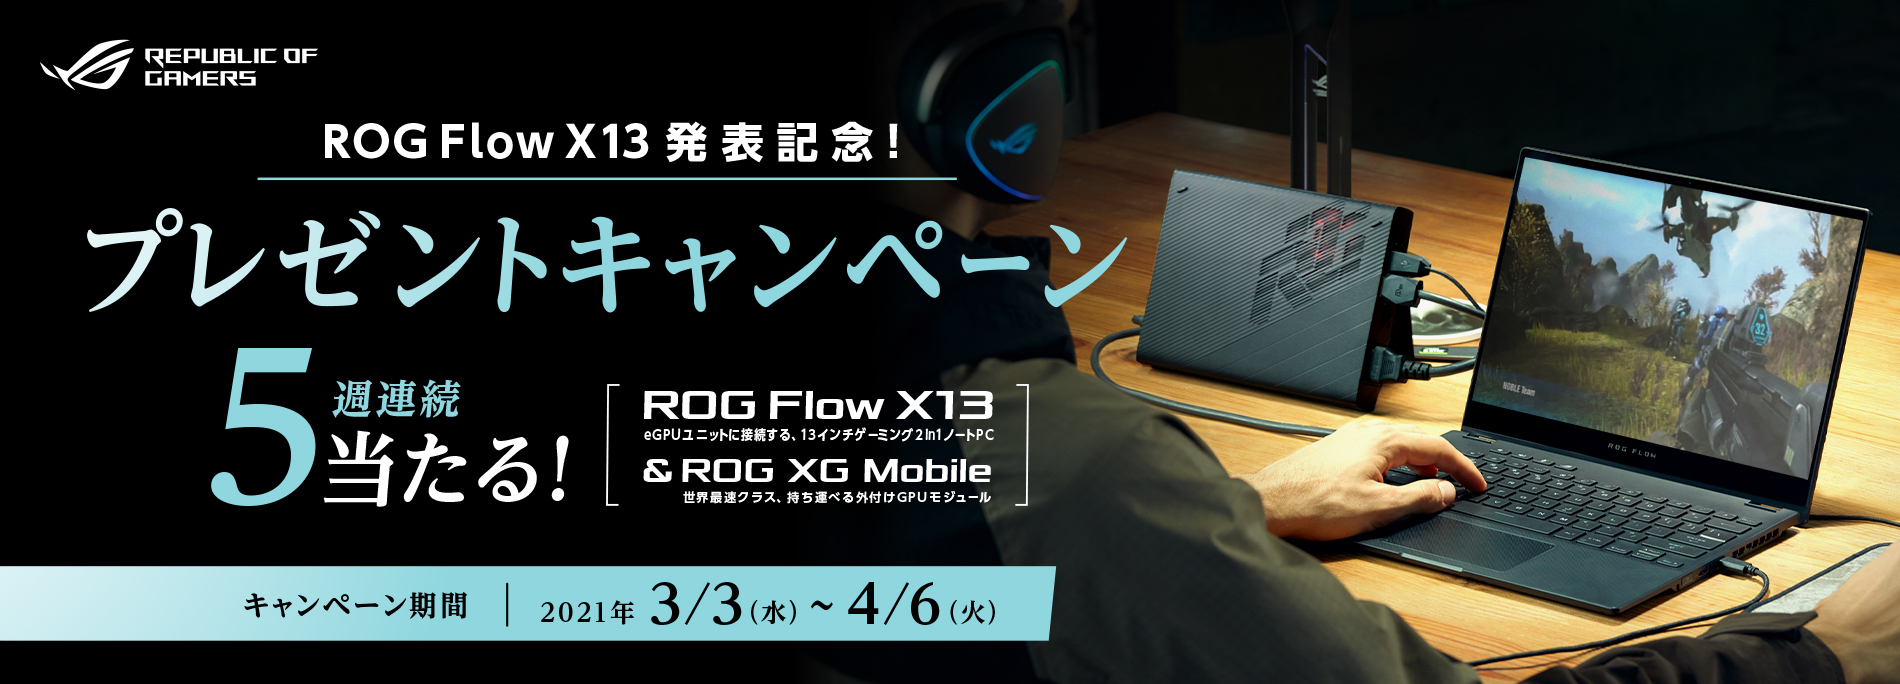 ASUS Event  ROG Flow X発表記念!プレゼントキャンペーン